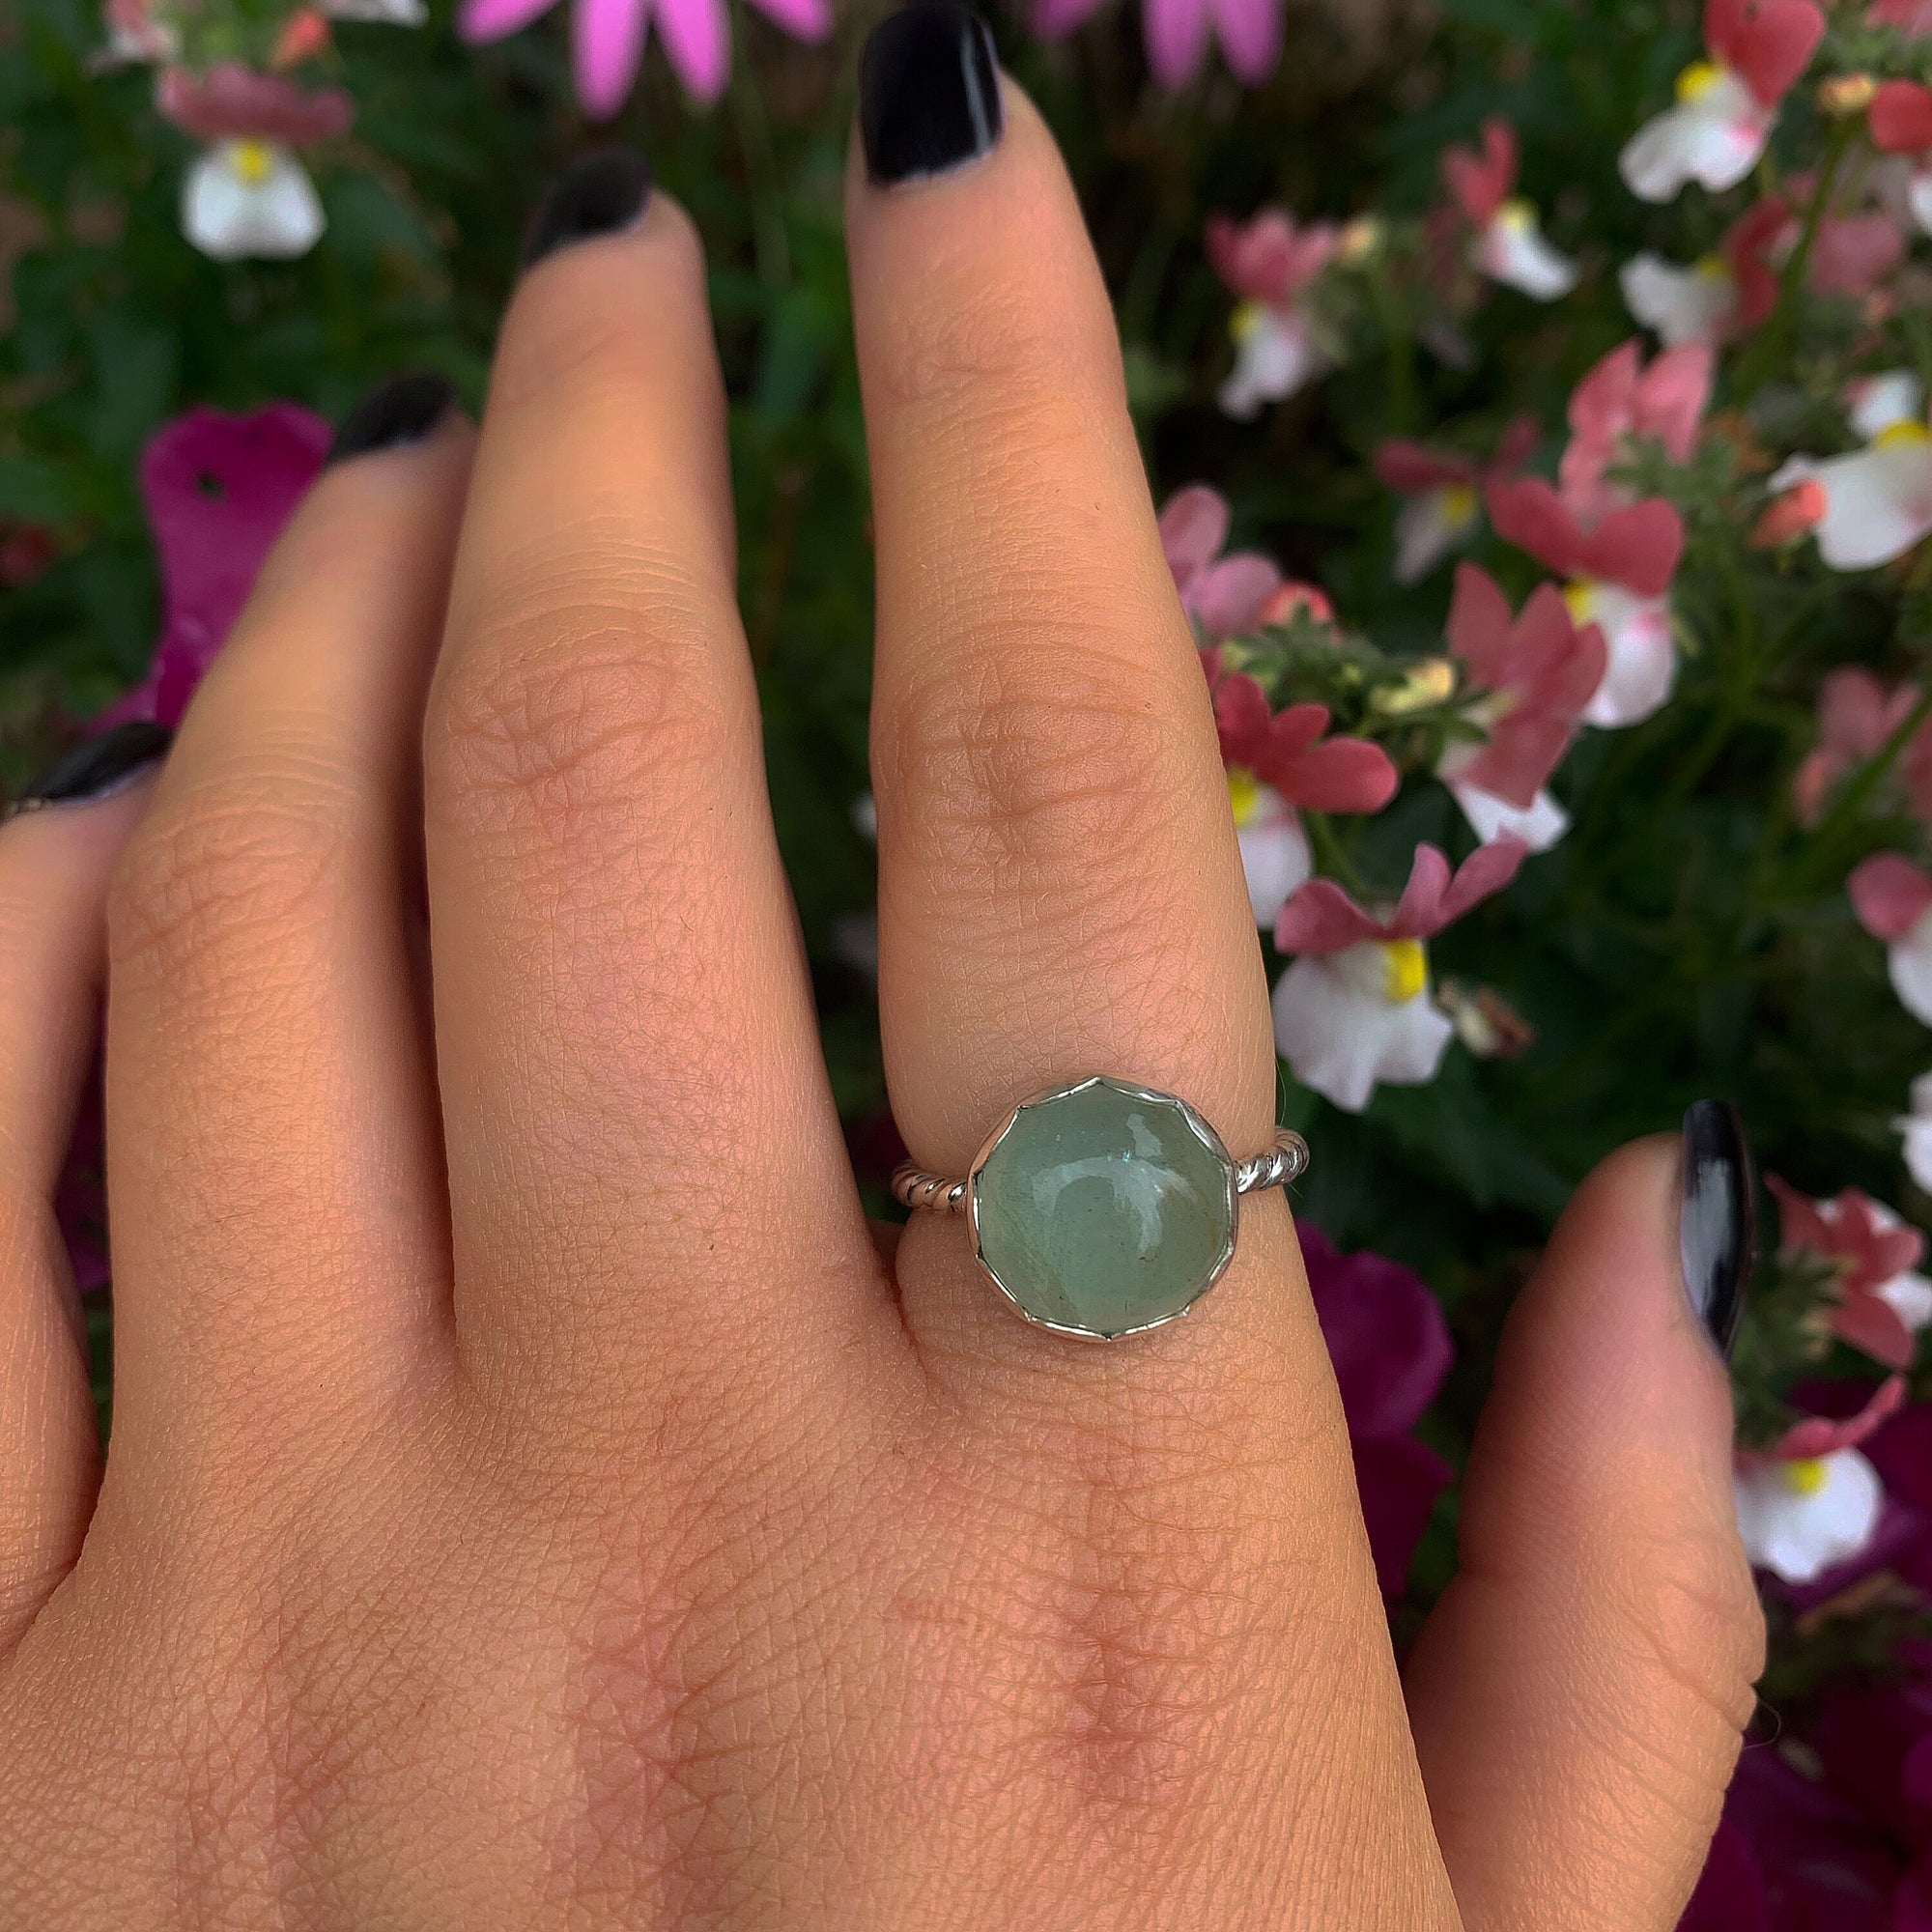 Aquamarine Ring - Size 7.5 